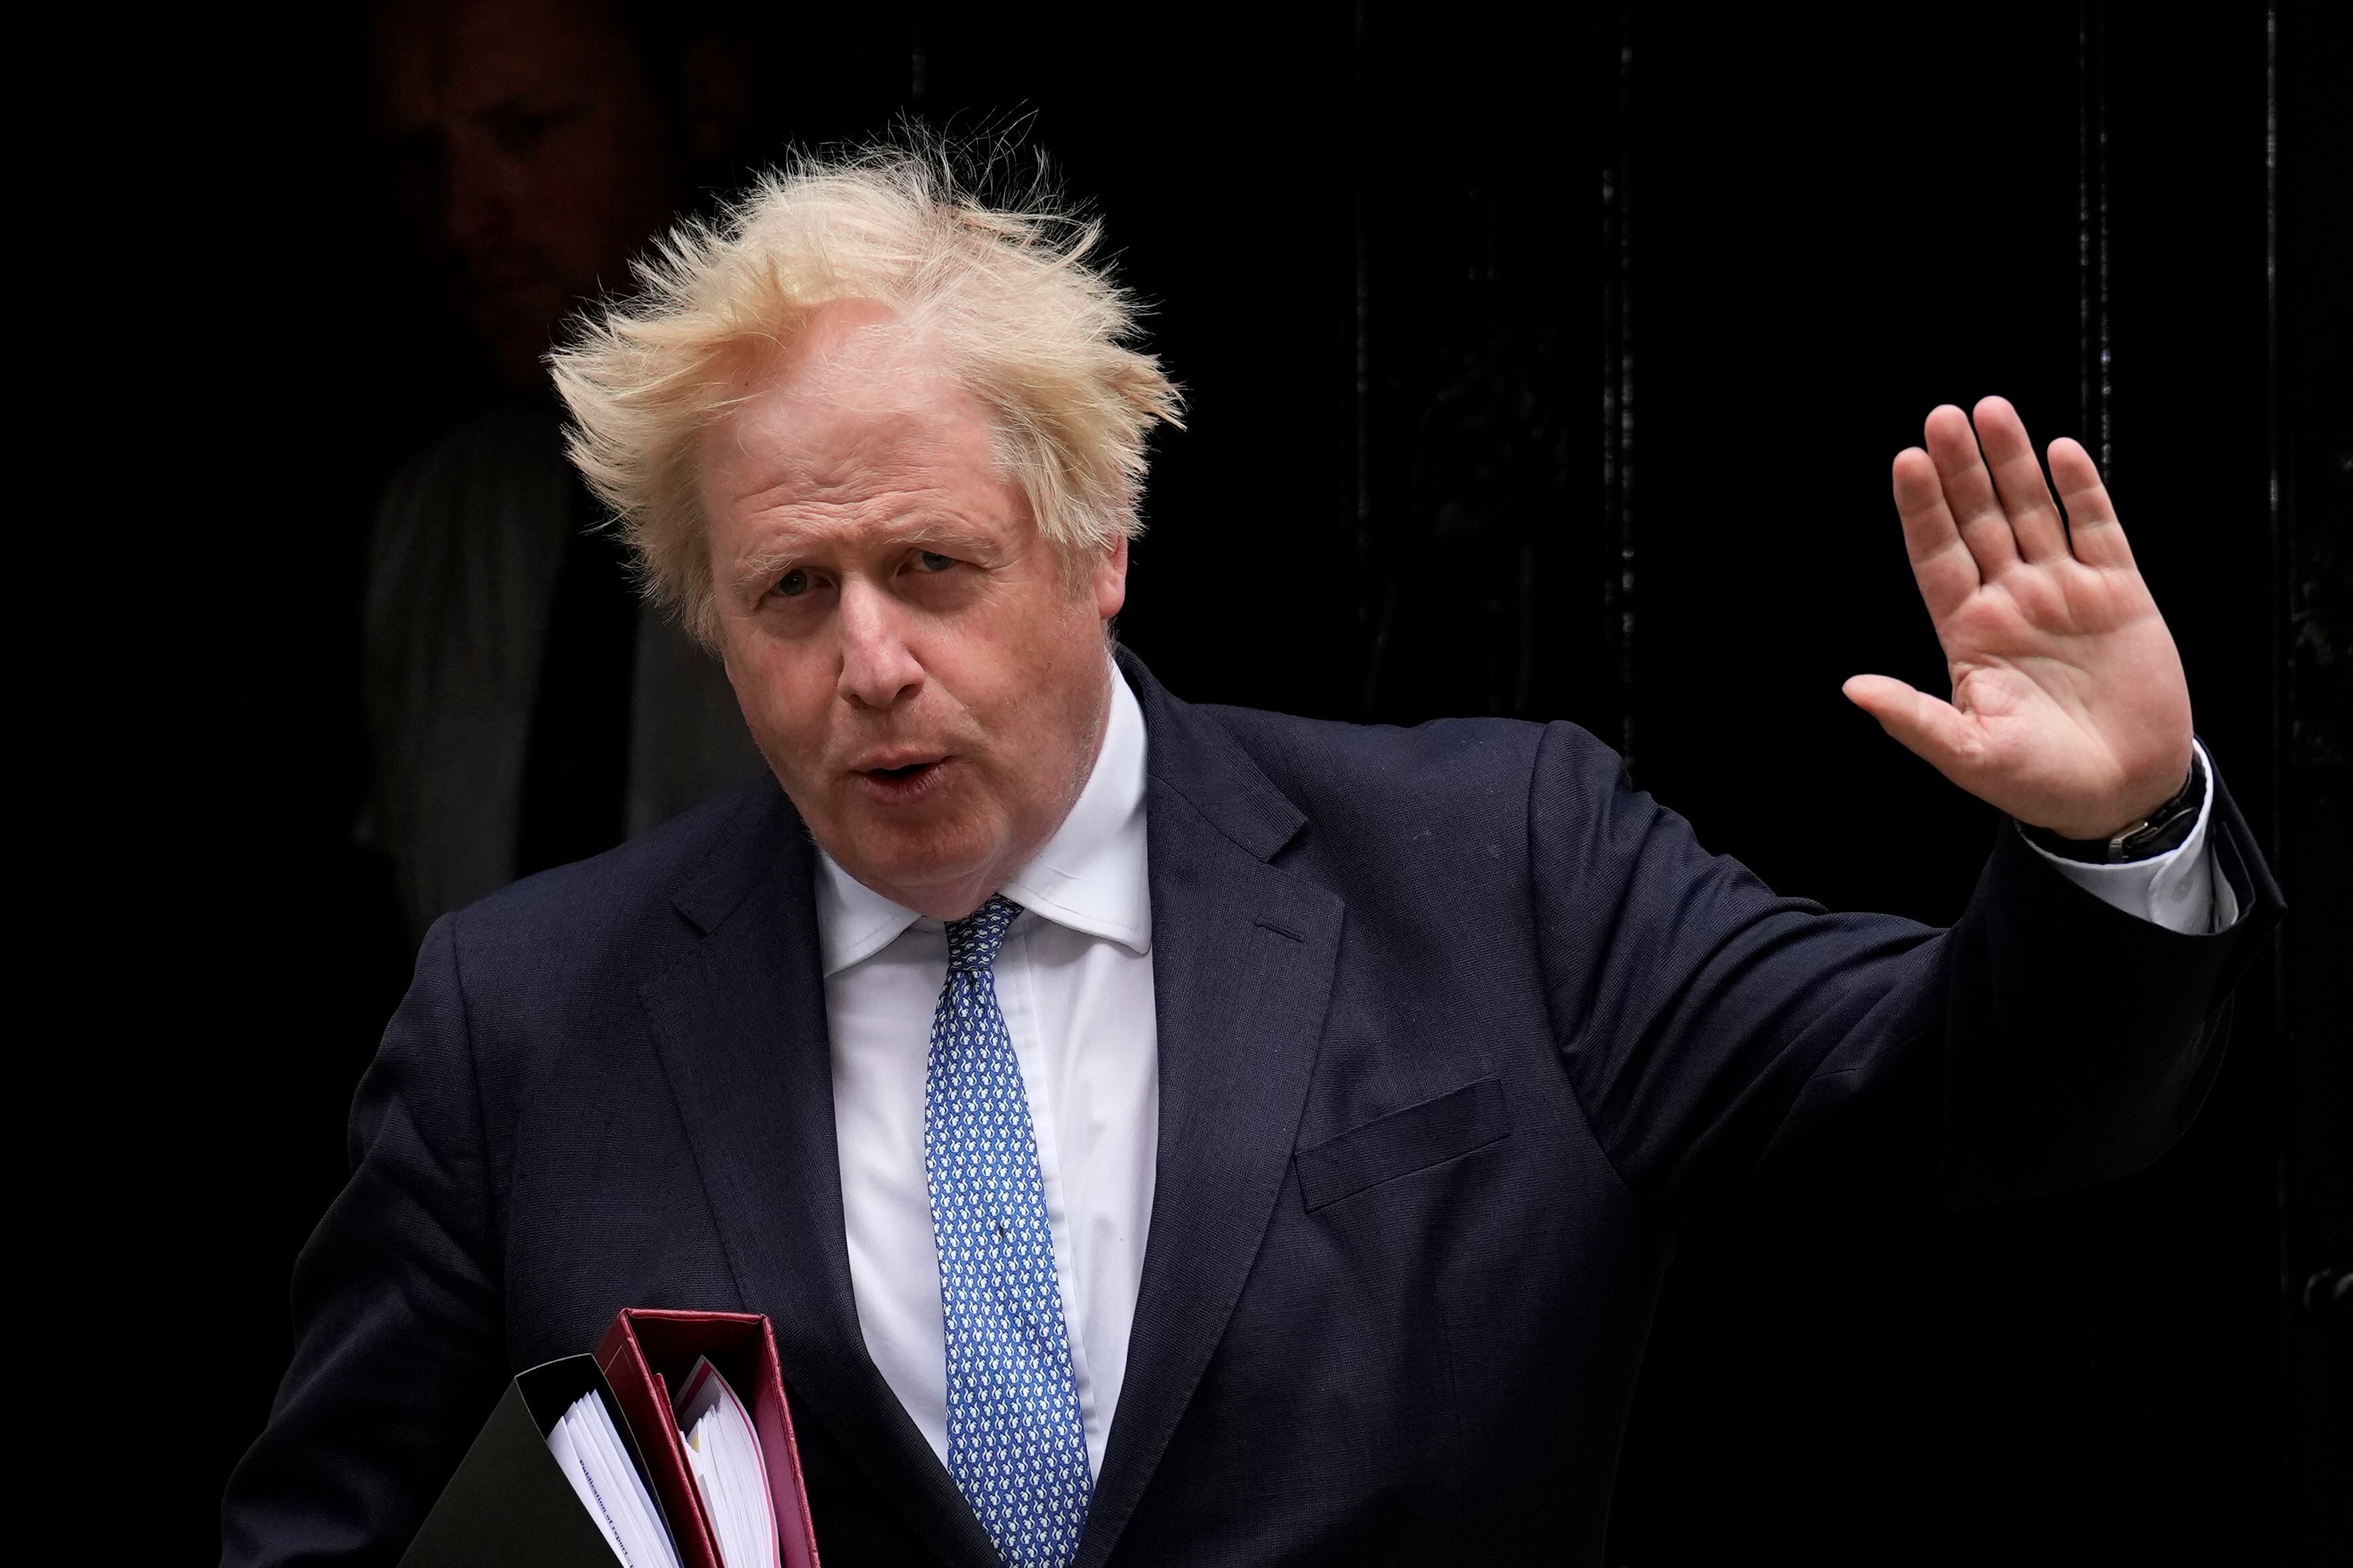 Boris Johnson signs deal for memoir of turbulent premiership